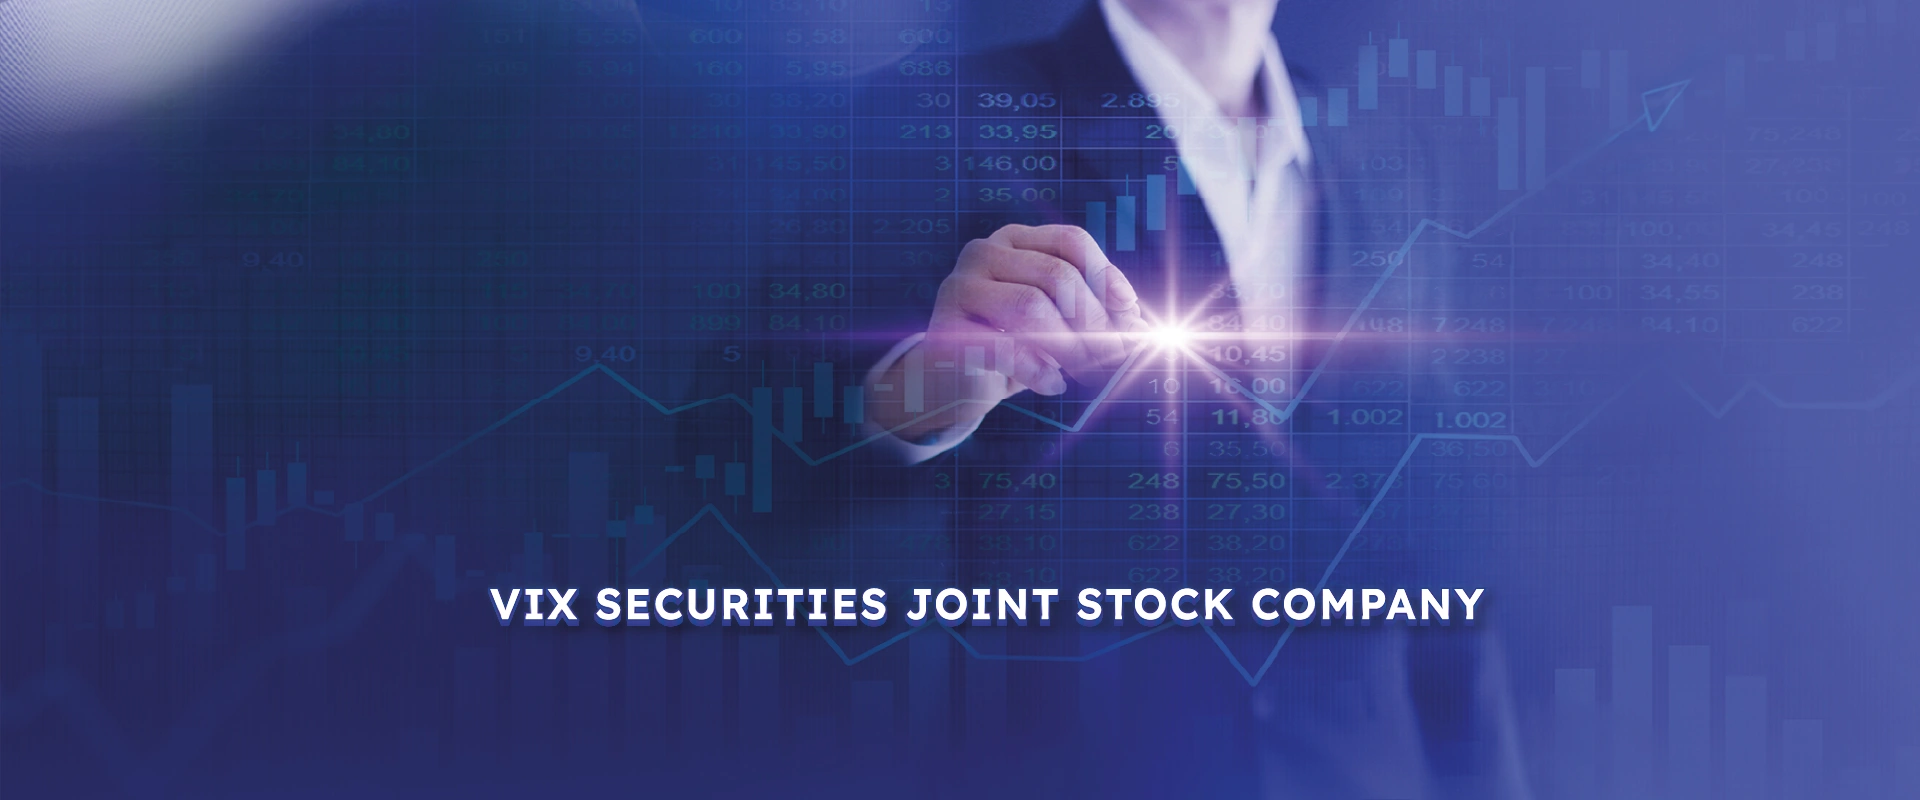 VIX SECURITIES JOINT STOCK COMPANY